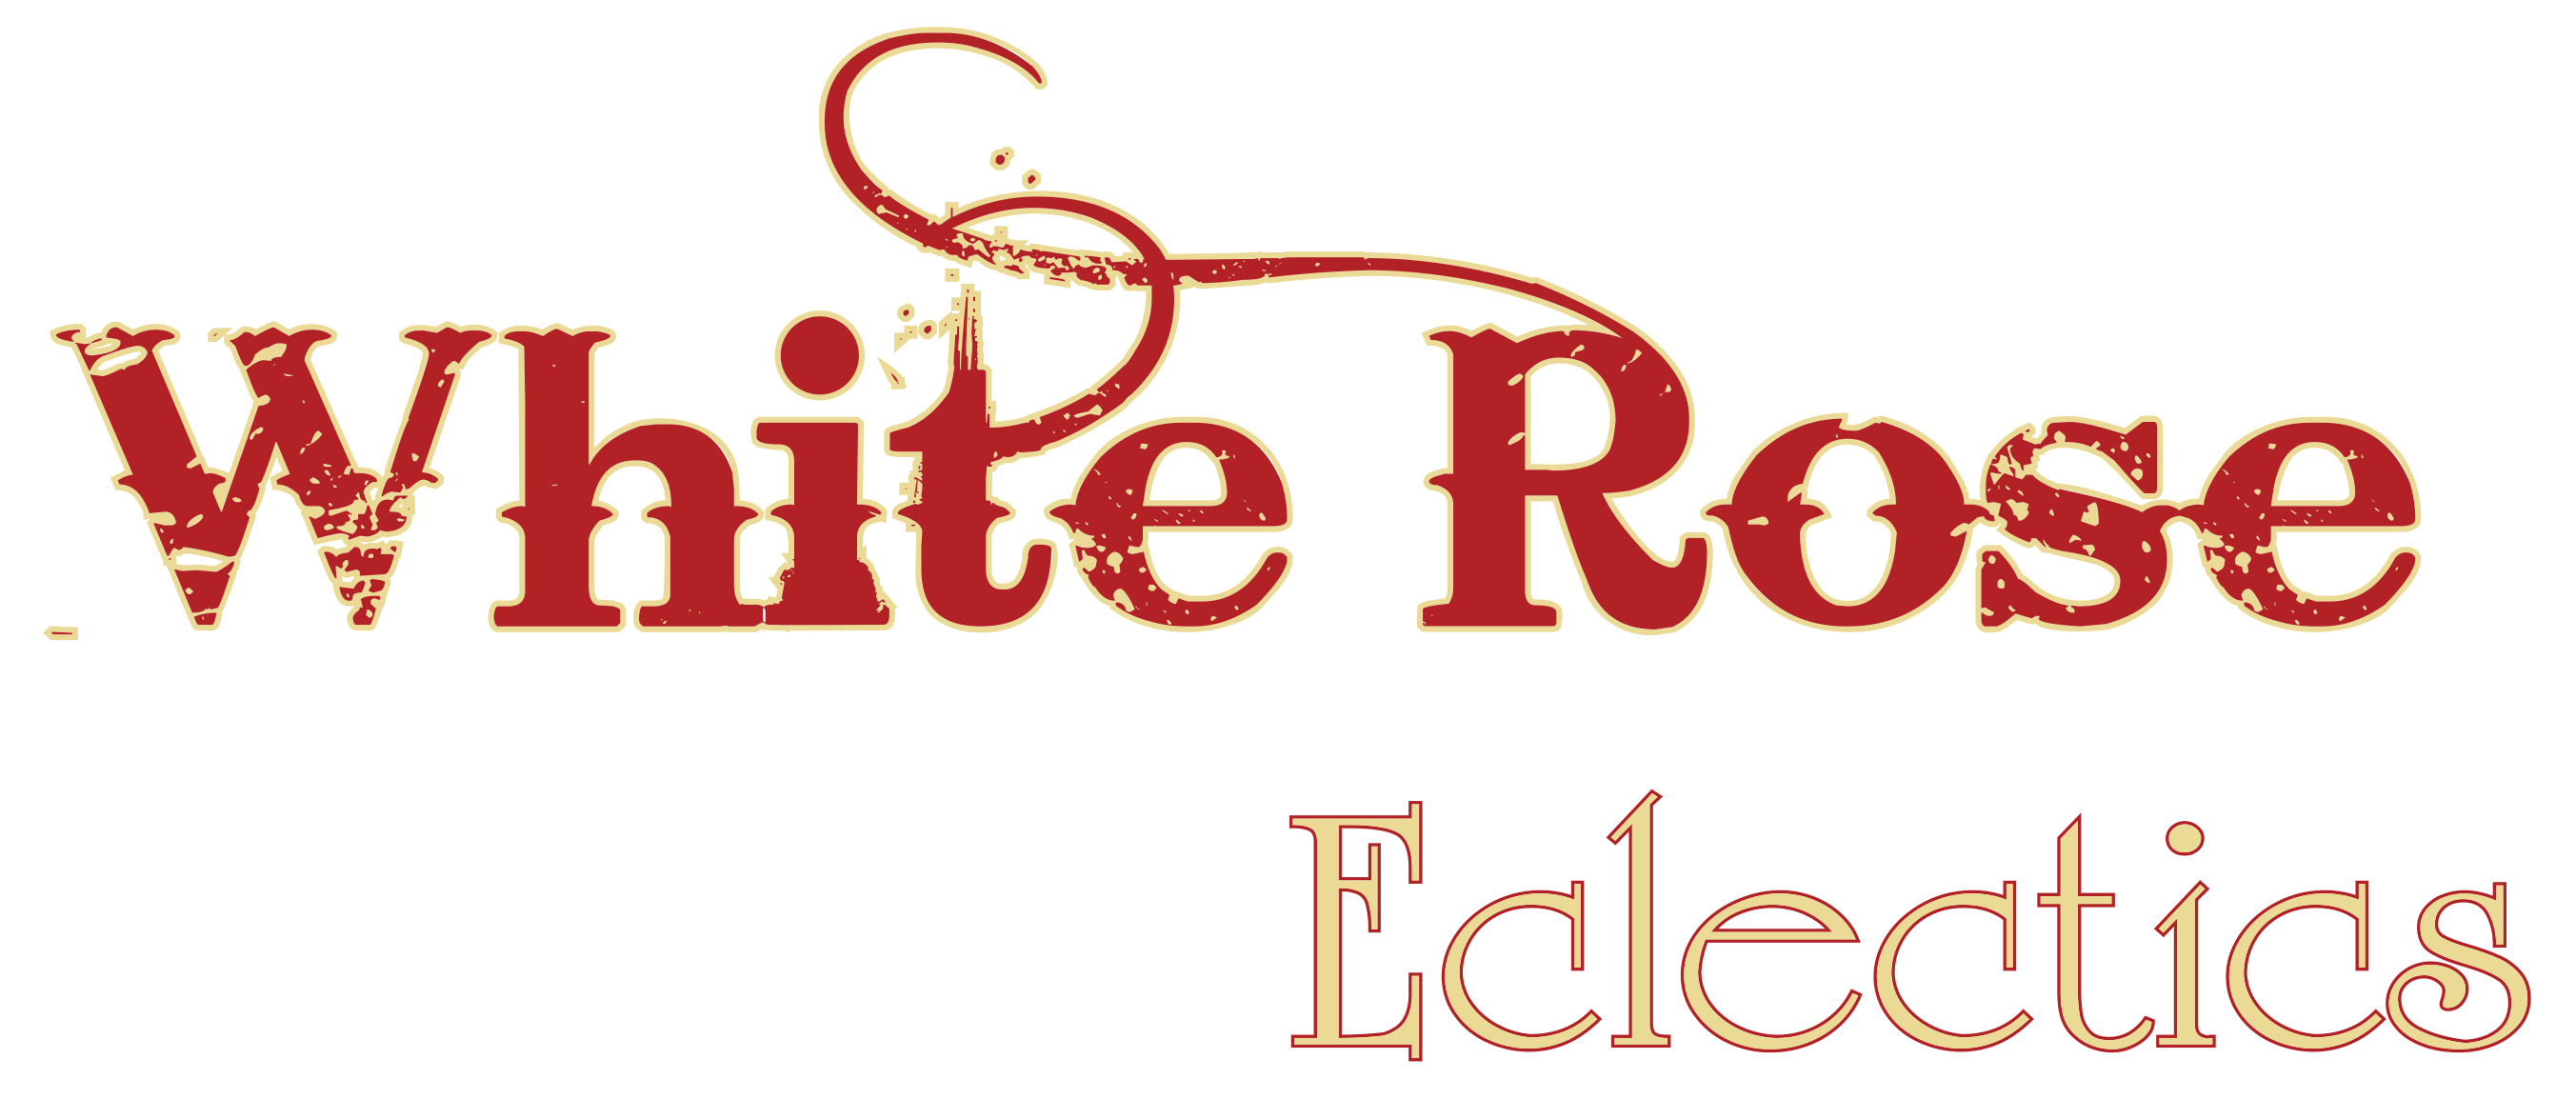 White Rose Eclectics logo clear original32